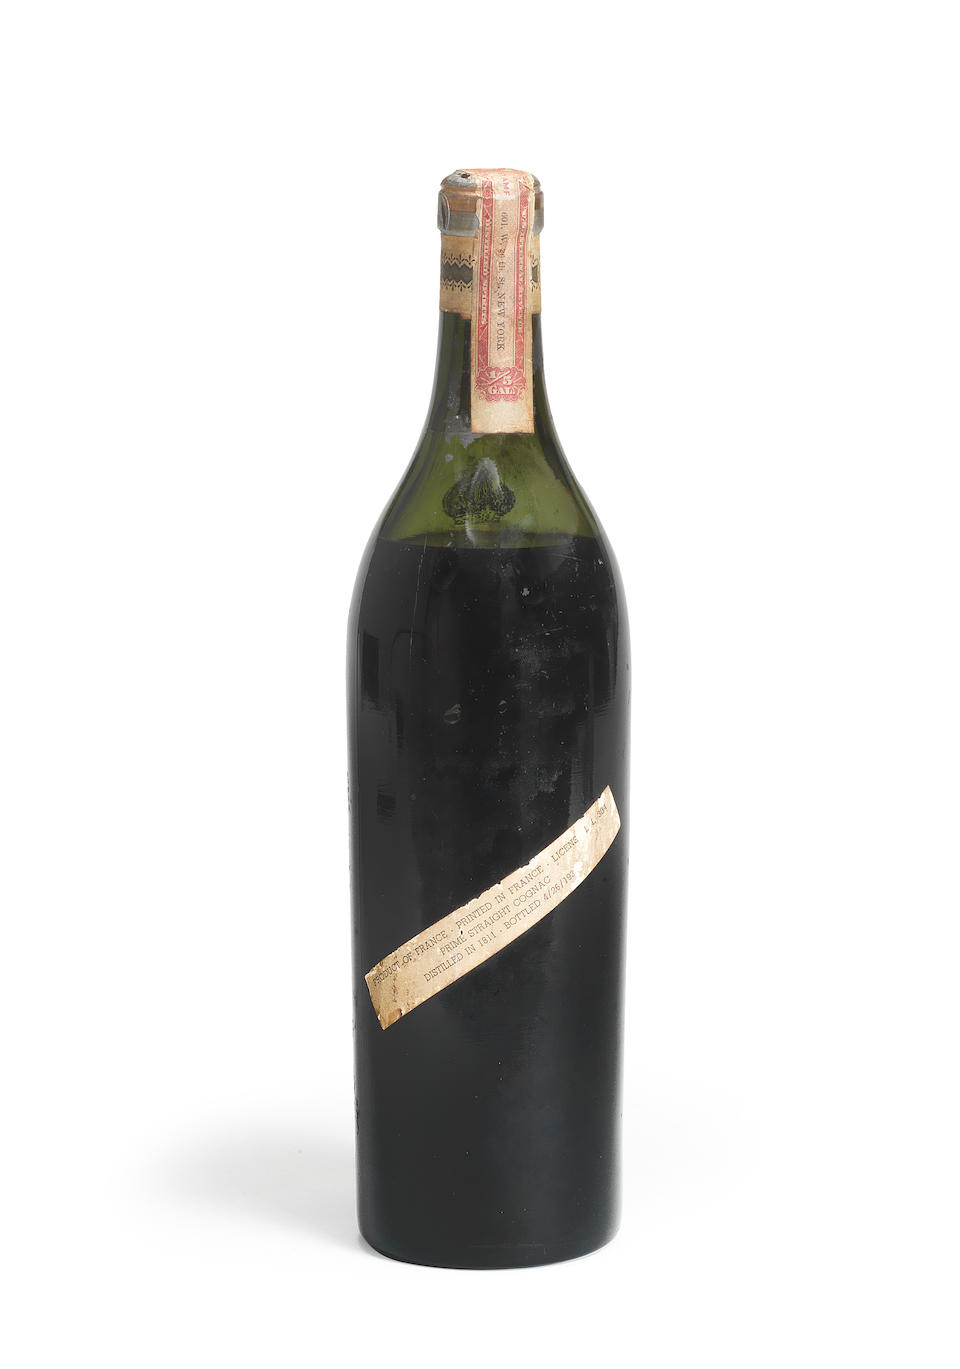 GAGNEUR & CO. 1811 GRANDE FINE CHAMPAGNE COGNAC RESERVE, IMPERATRICE JOSEPHINE, Distilled 1811, bottled 1930's; 42% volume; 75.7cl bottle (1)